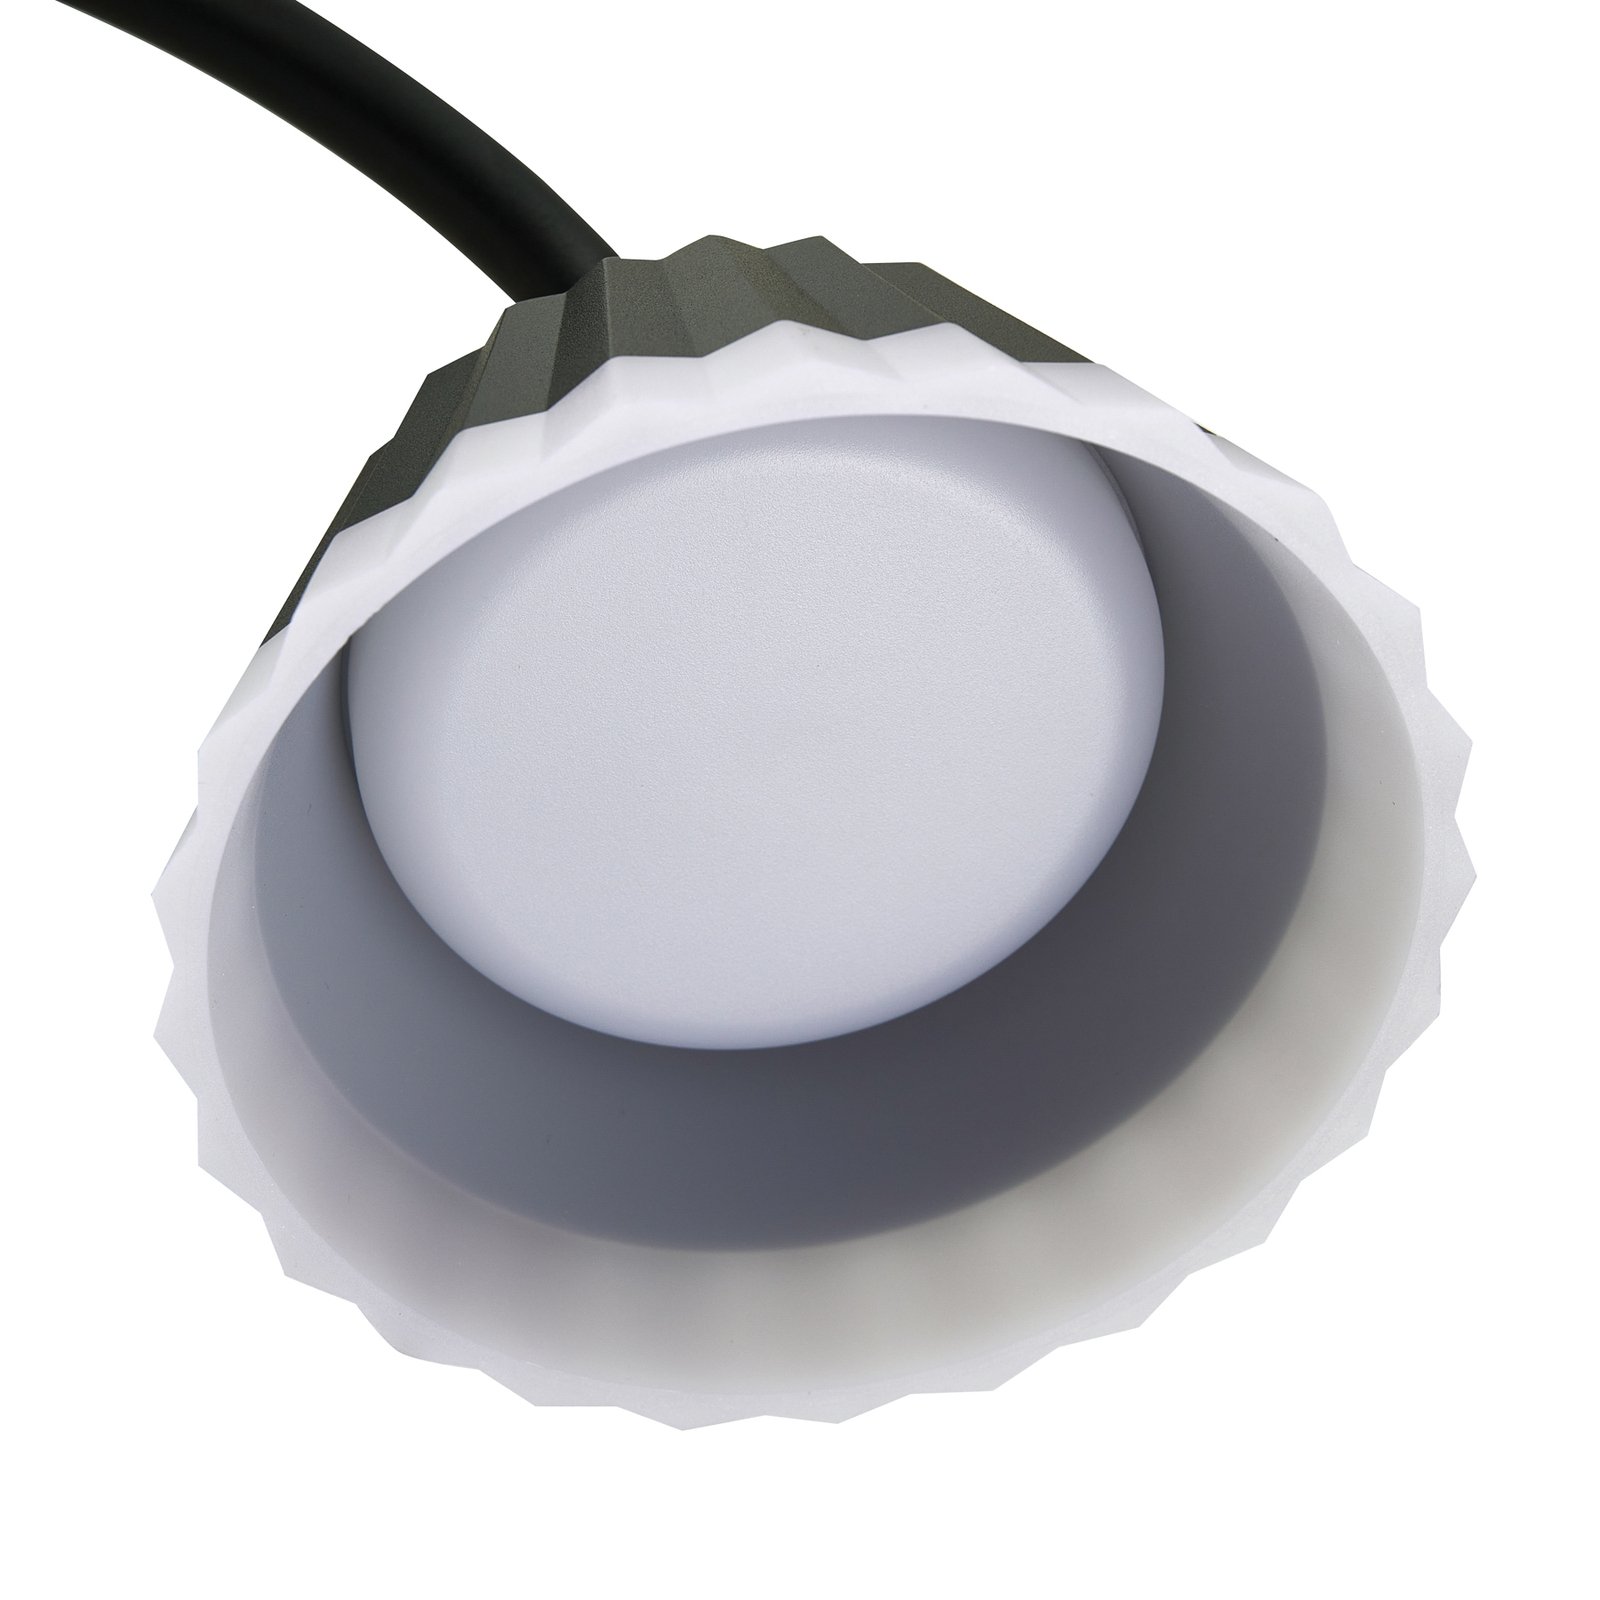 Lindby LED ground spike light Ameline, dark grey, IP65, 77 cm